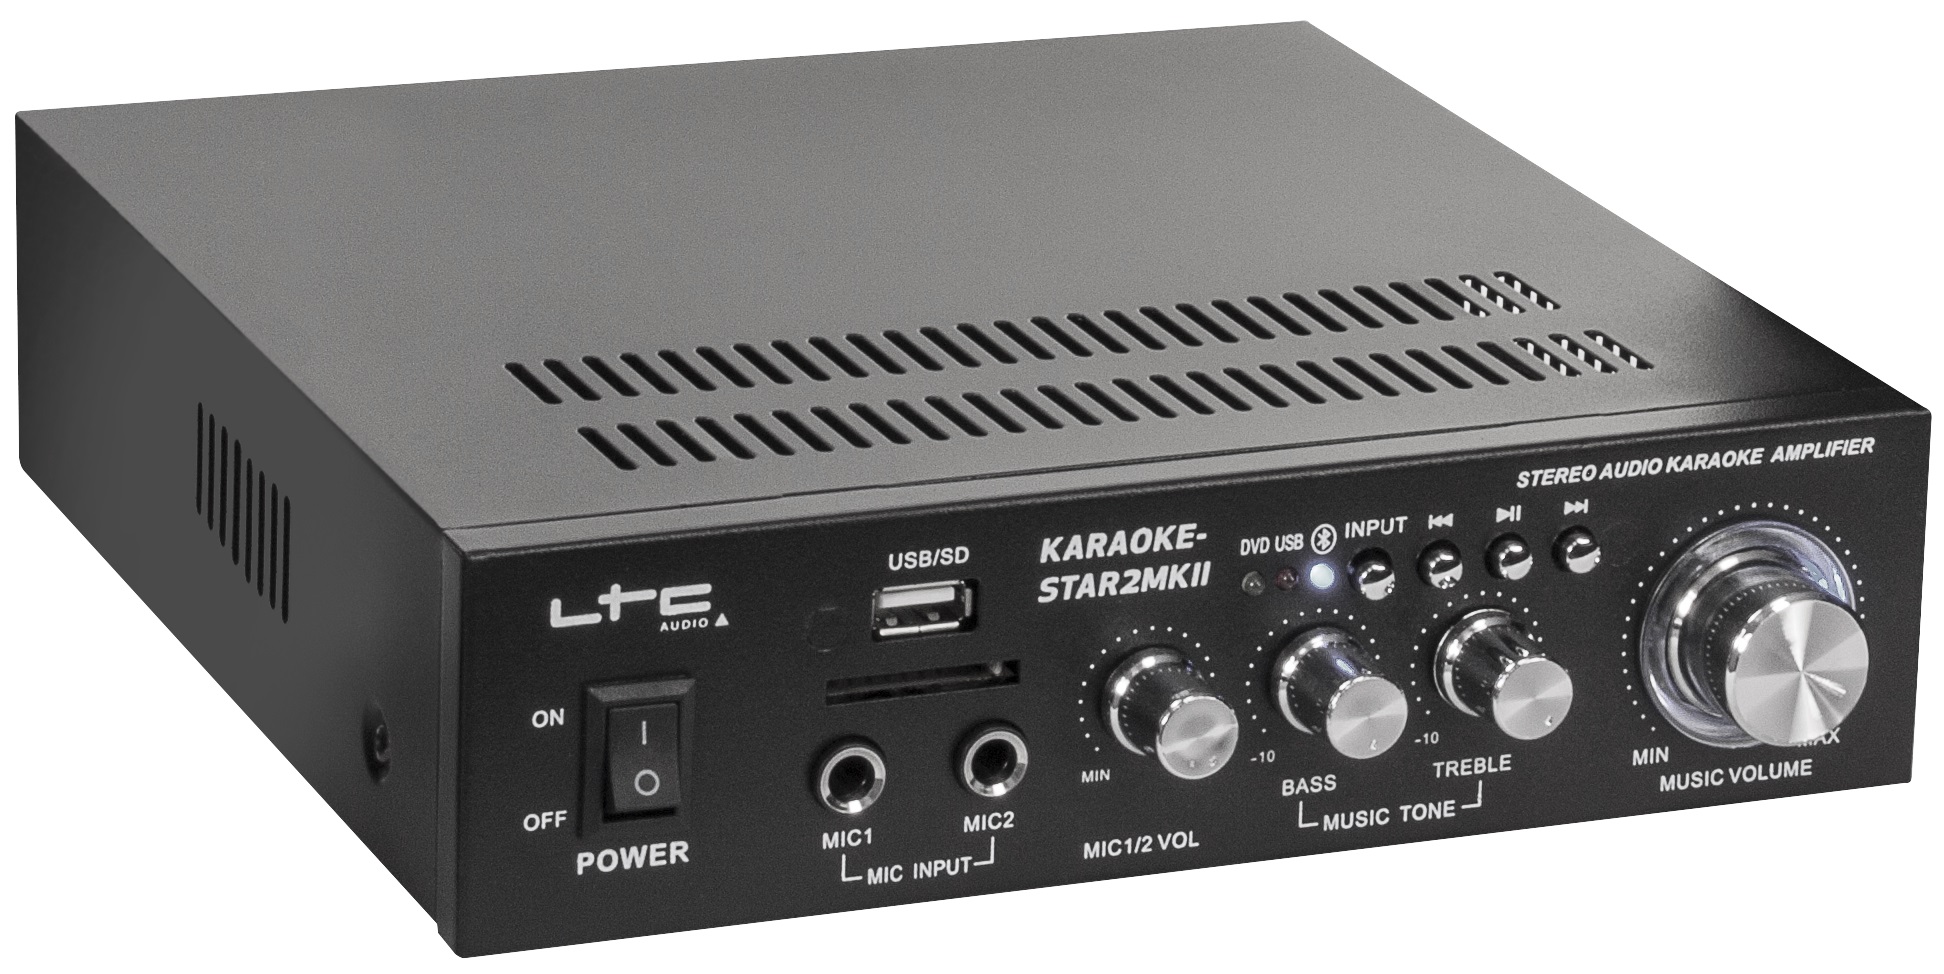 Karaoke-Set LTC "STAR2-MKII" USB/SD, Bluetooth, inkl. zwei Mikrofone und Boxen - Bild 1